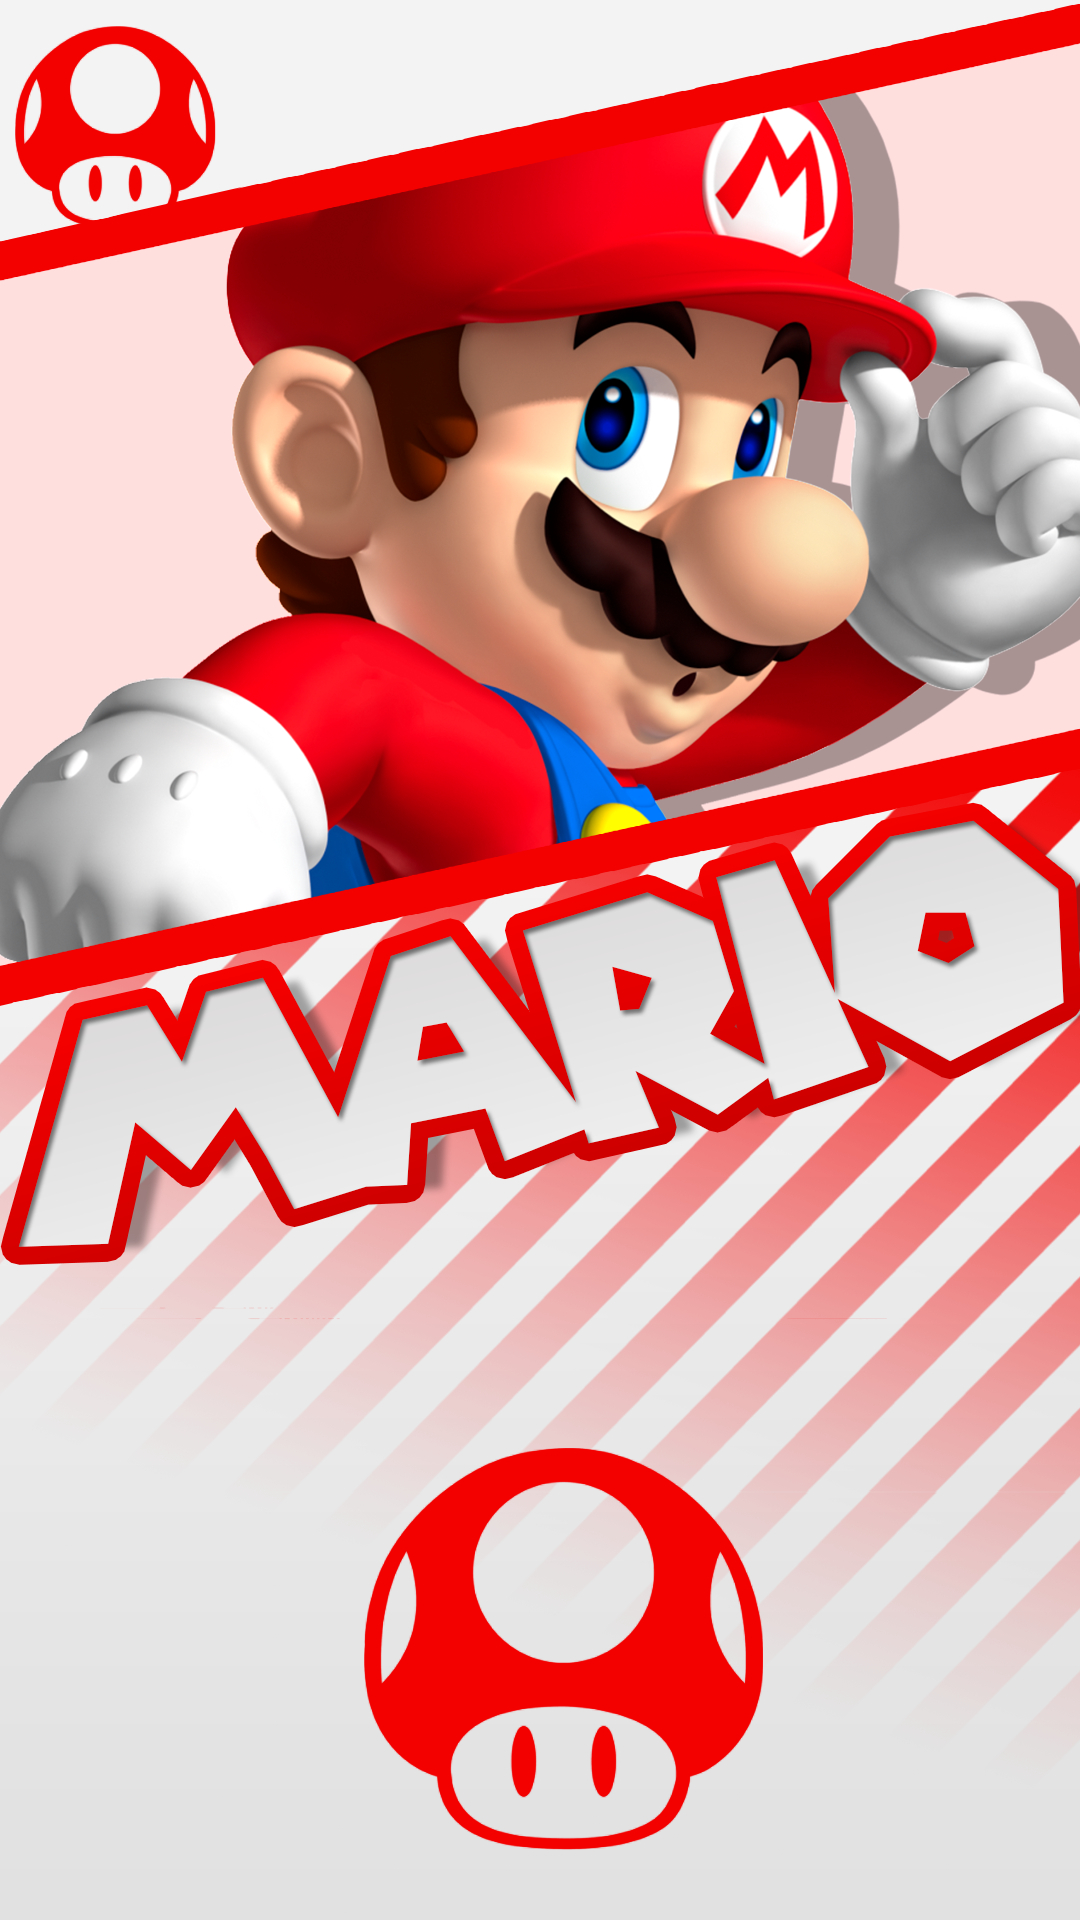 1080x1920 7 Super Mario Wallpapers by MrThatKidAlex24